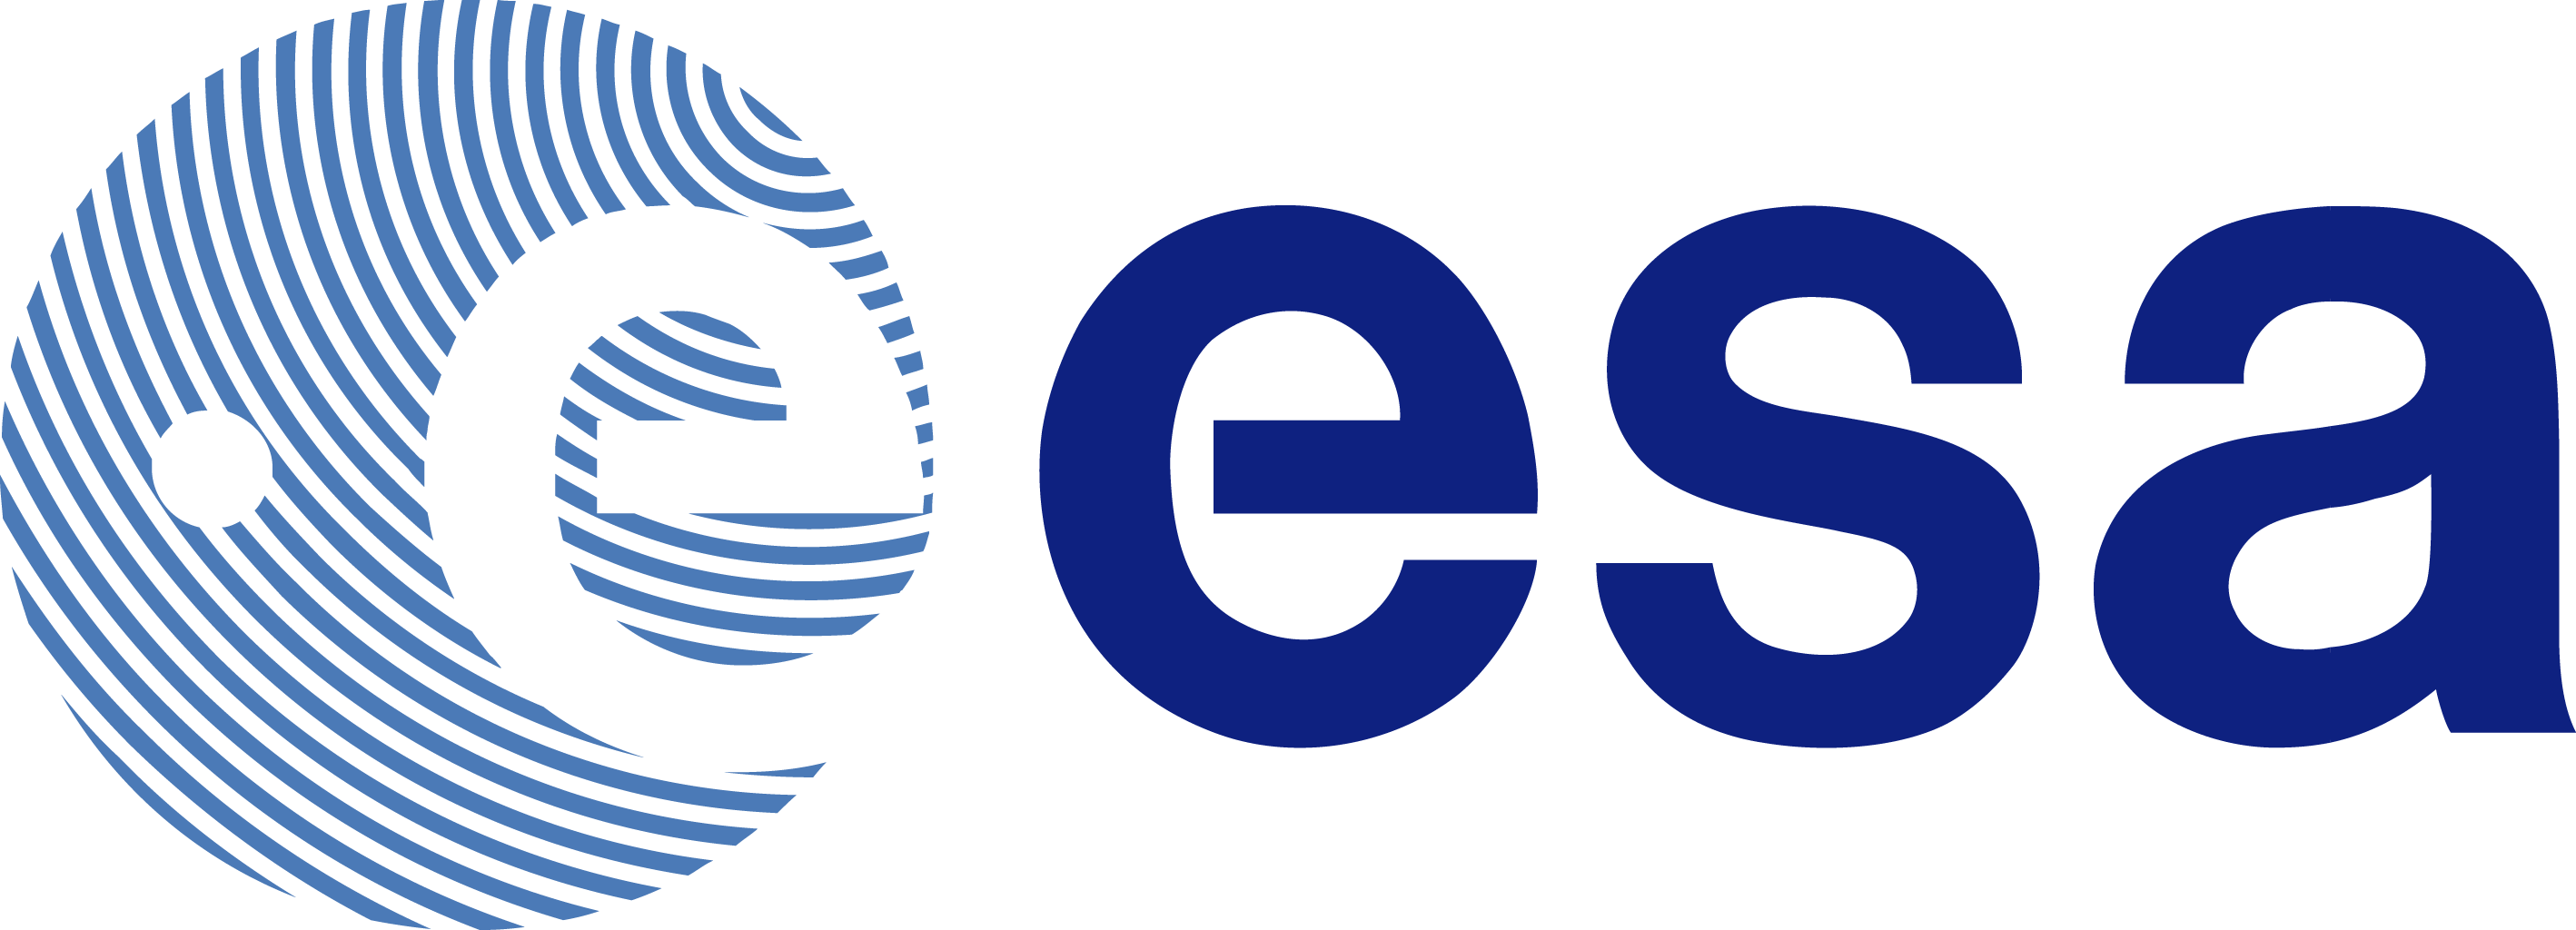 ESA   European Space Agency Logo png